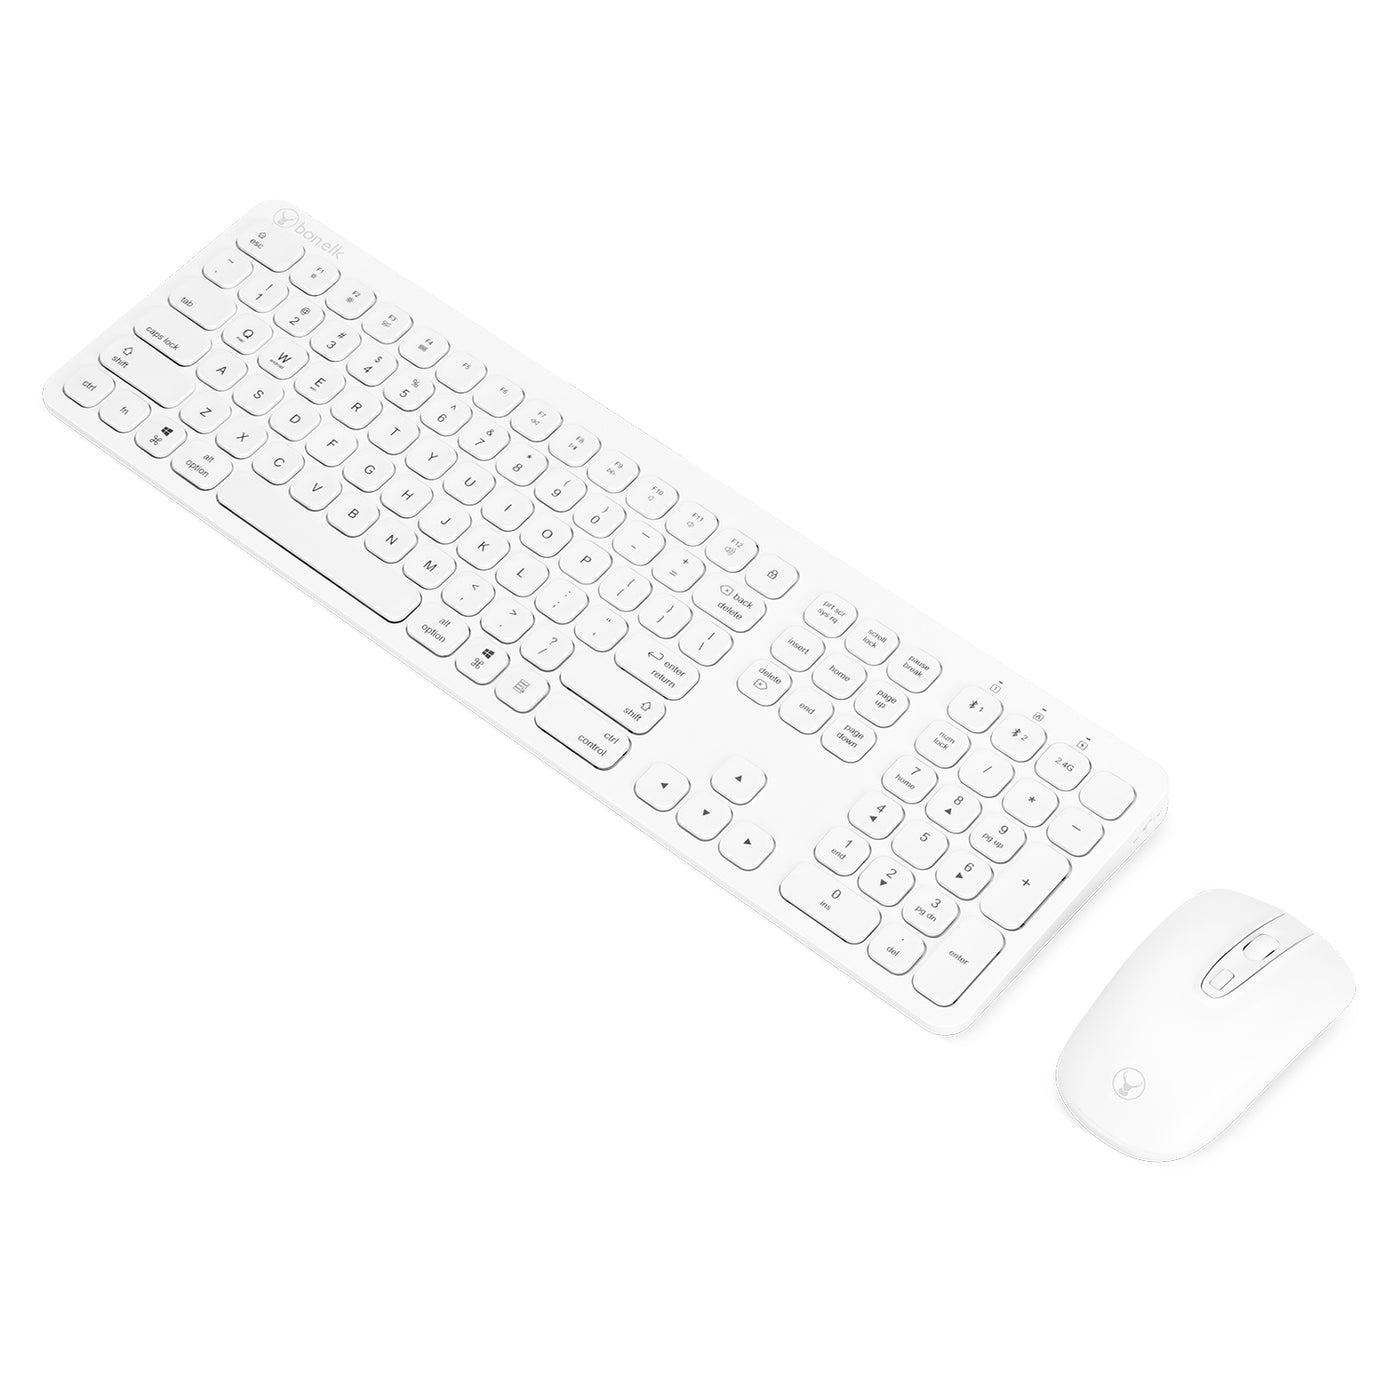 Bonelk Slim Bluetooth/Wireless Keyboard and Mouse Combo, KM-447 - White